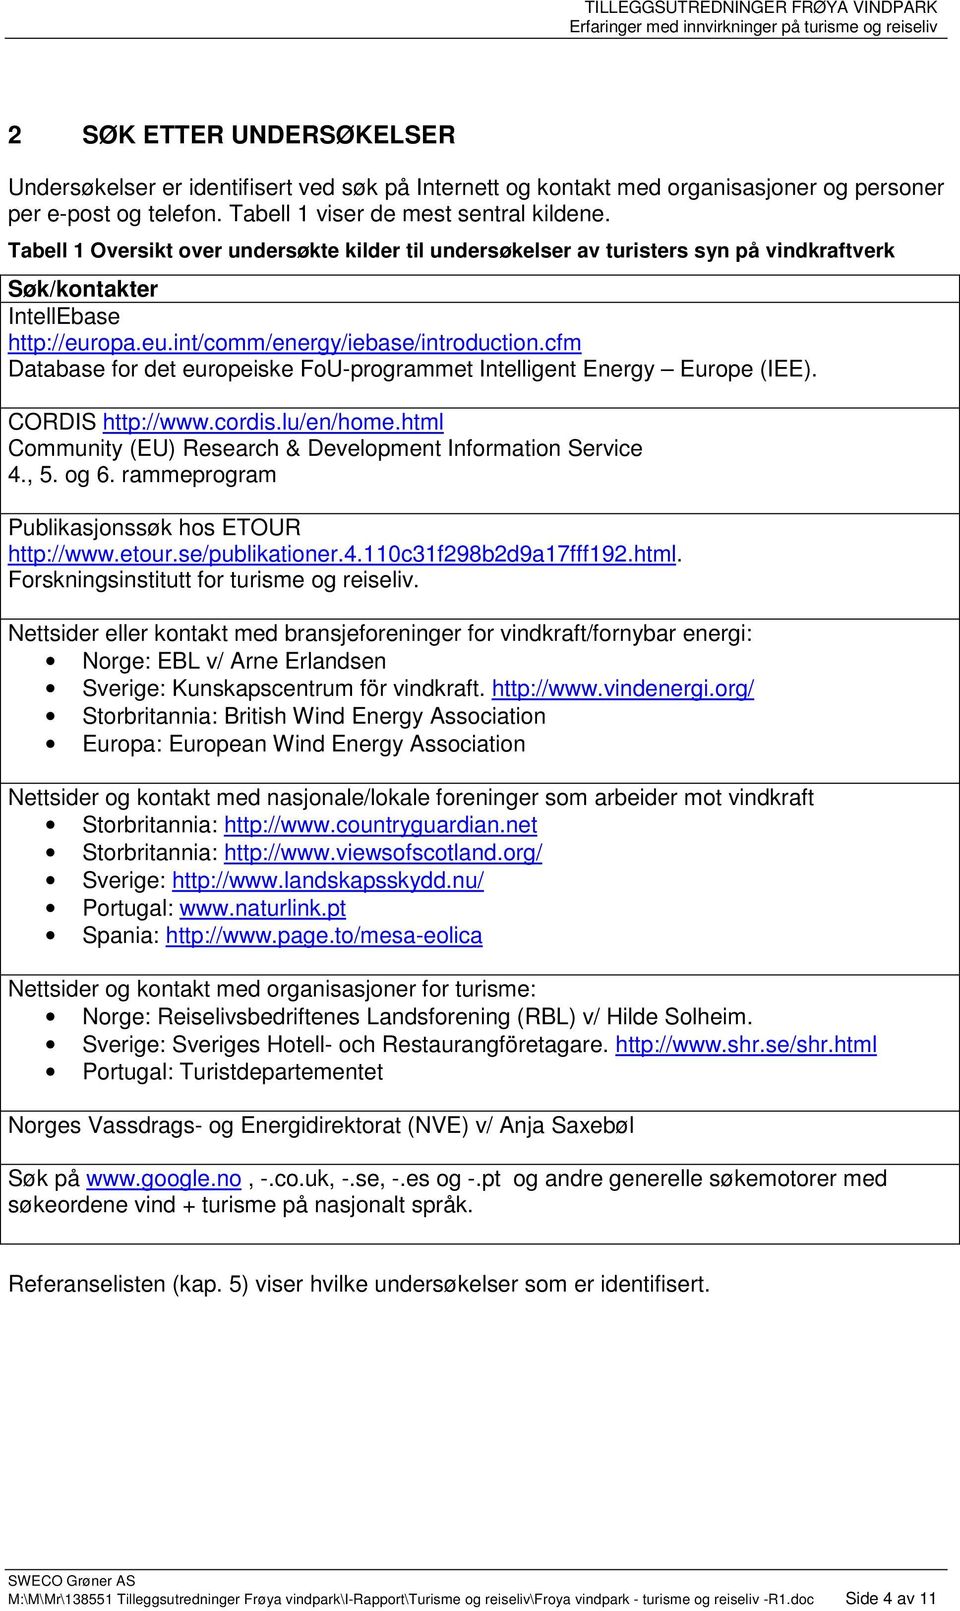 cfm Database for det europeiske FoU-programmet Intelligent Energy Europe (IEE). CORDIS http://www.cordis.lu/en/home.html Community (EU) Research & Development Information Service 4., 5. og 6.